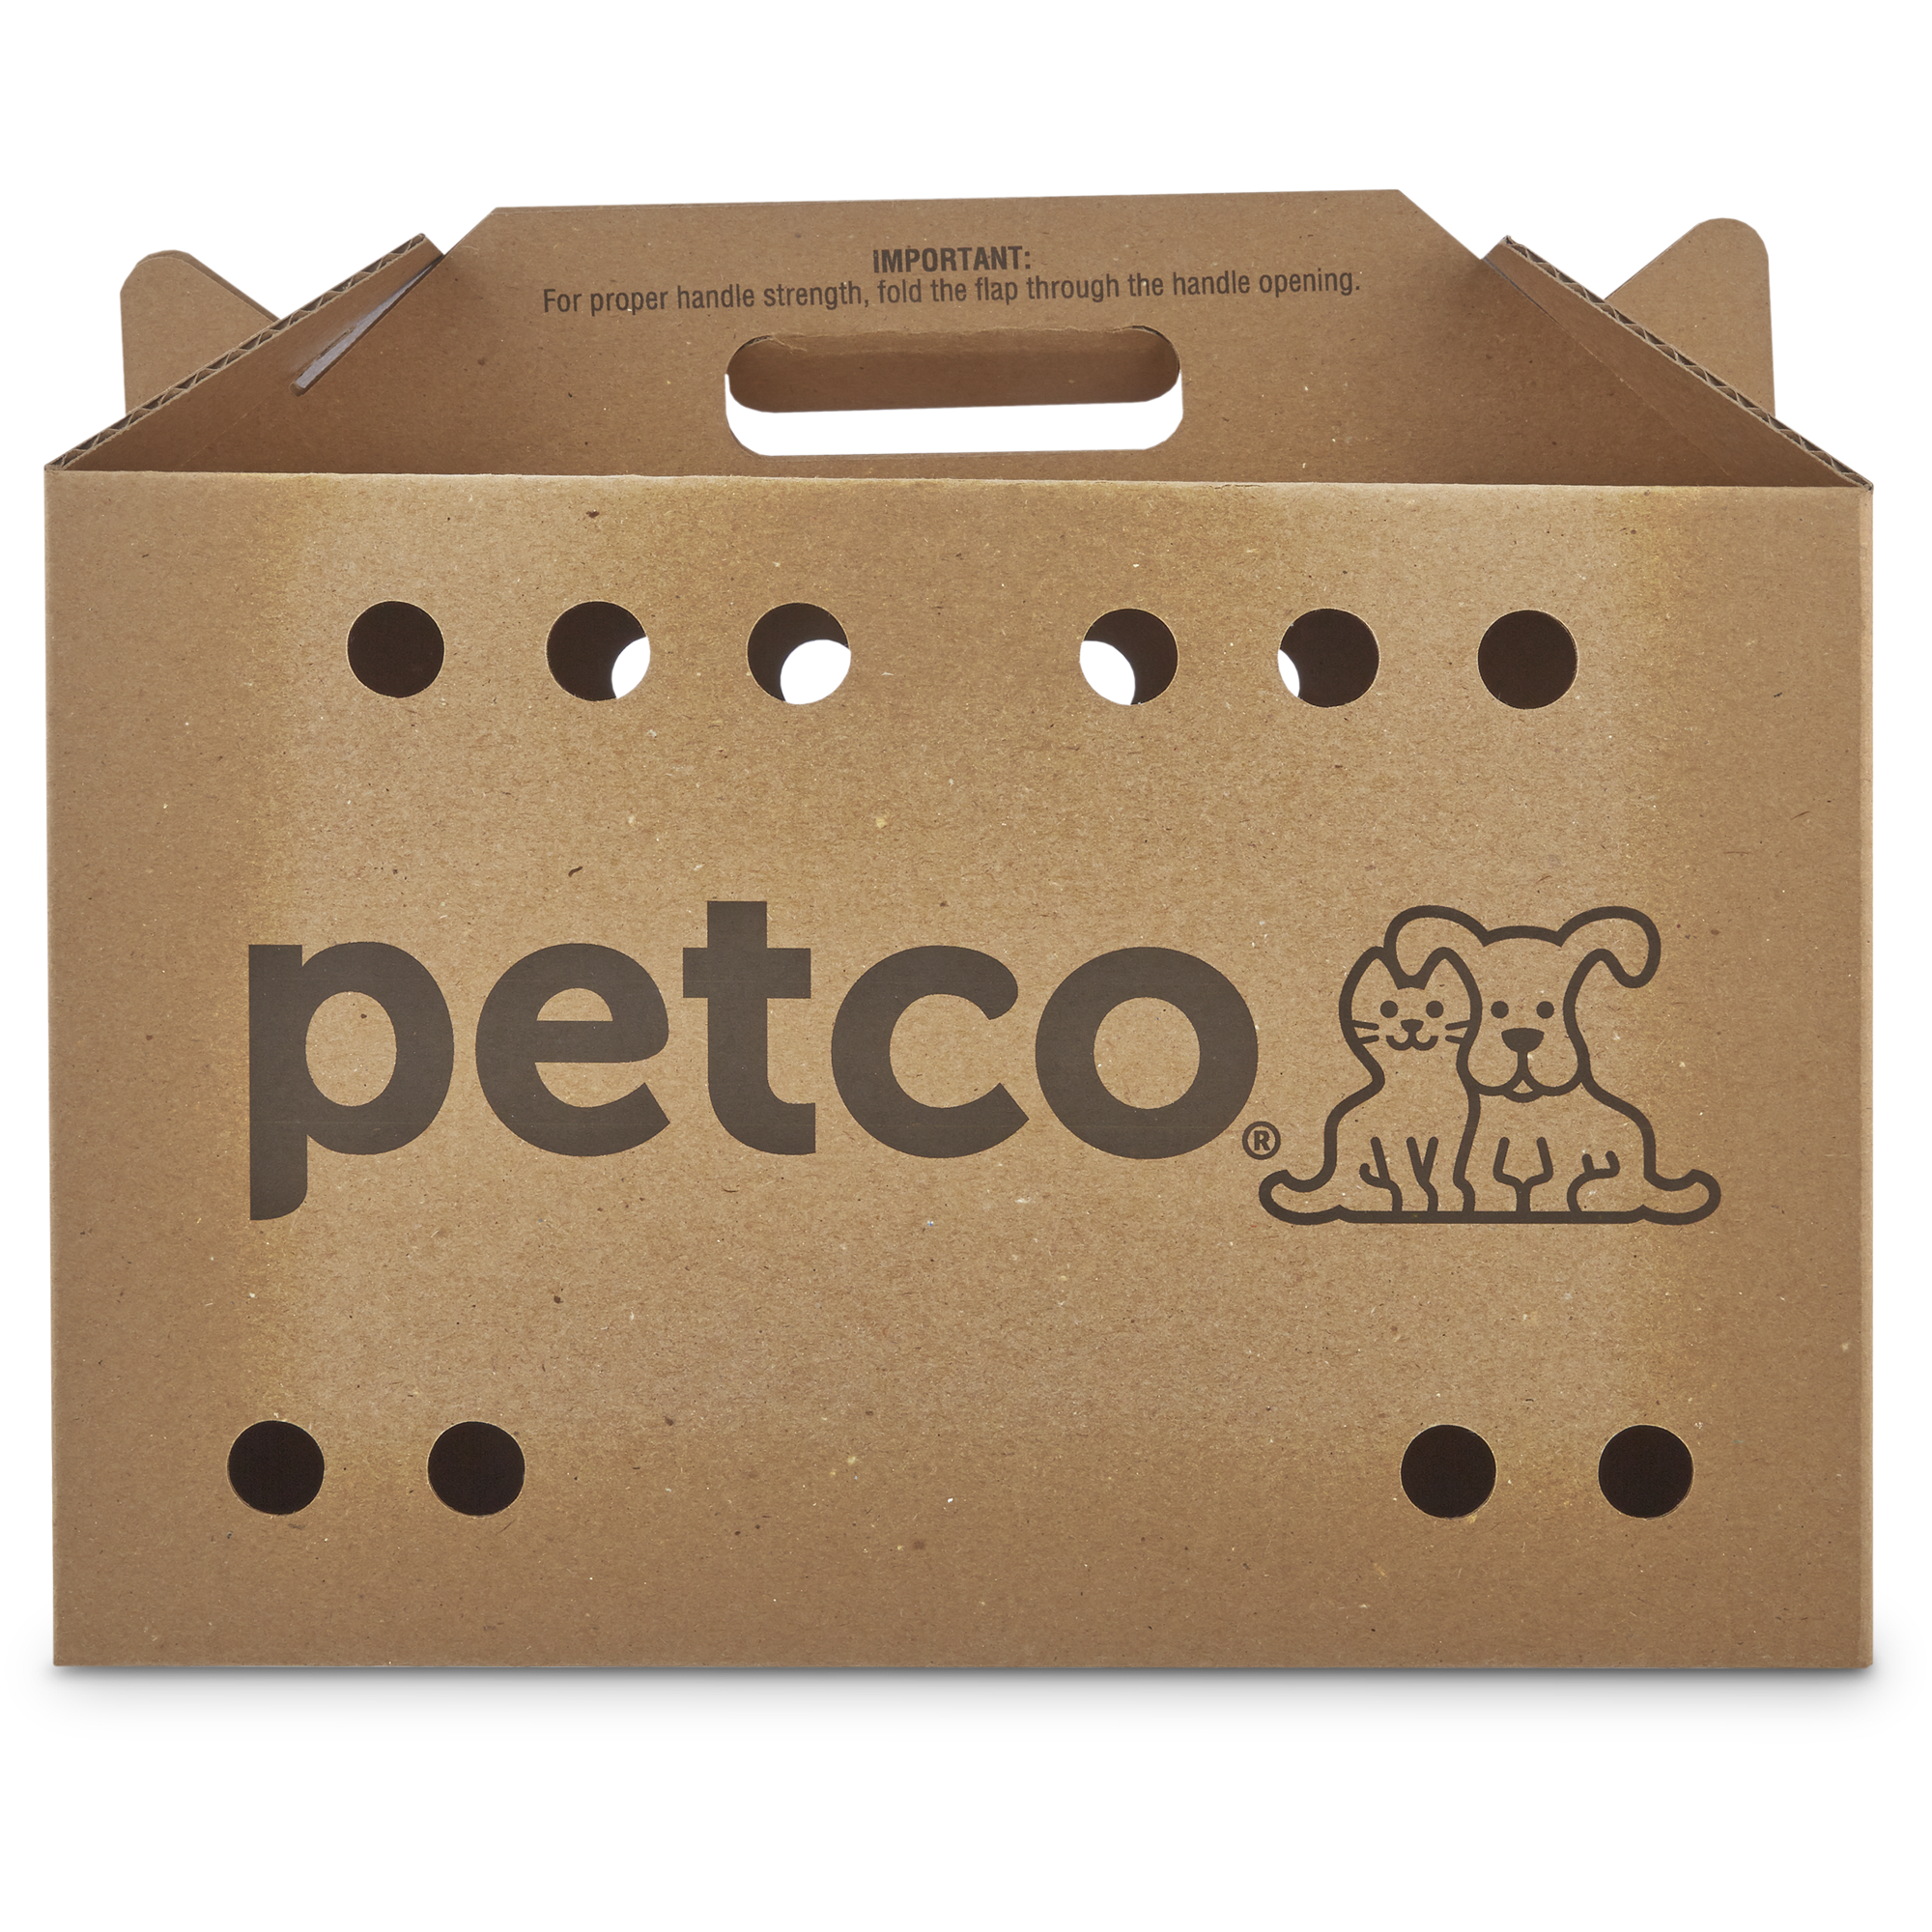 cardboard pet carrier